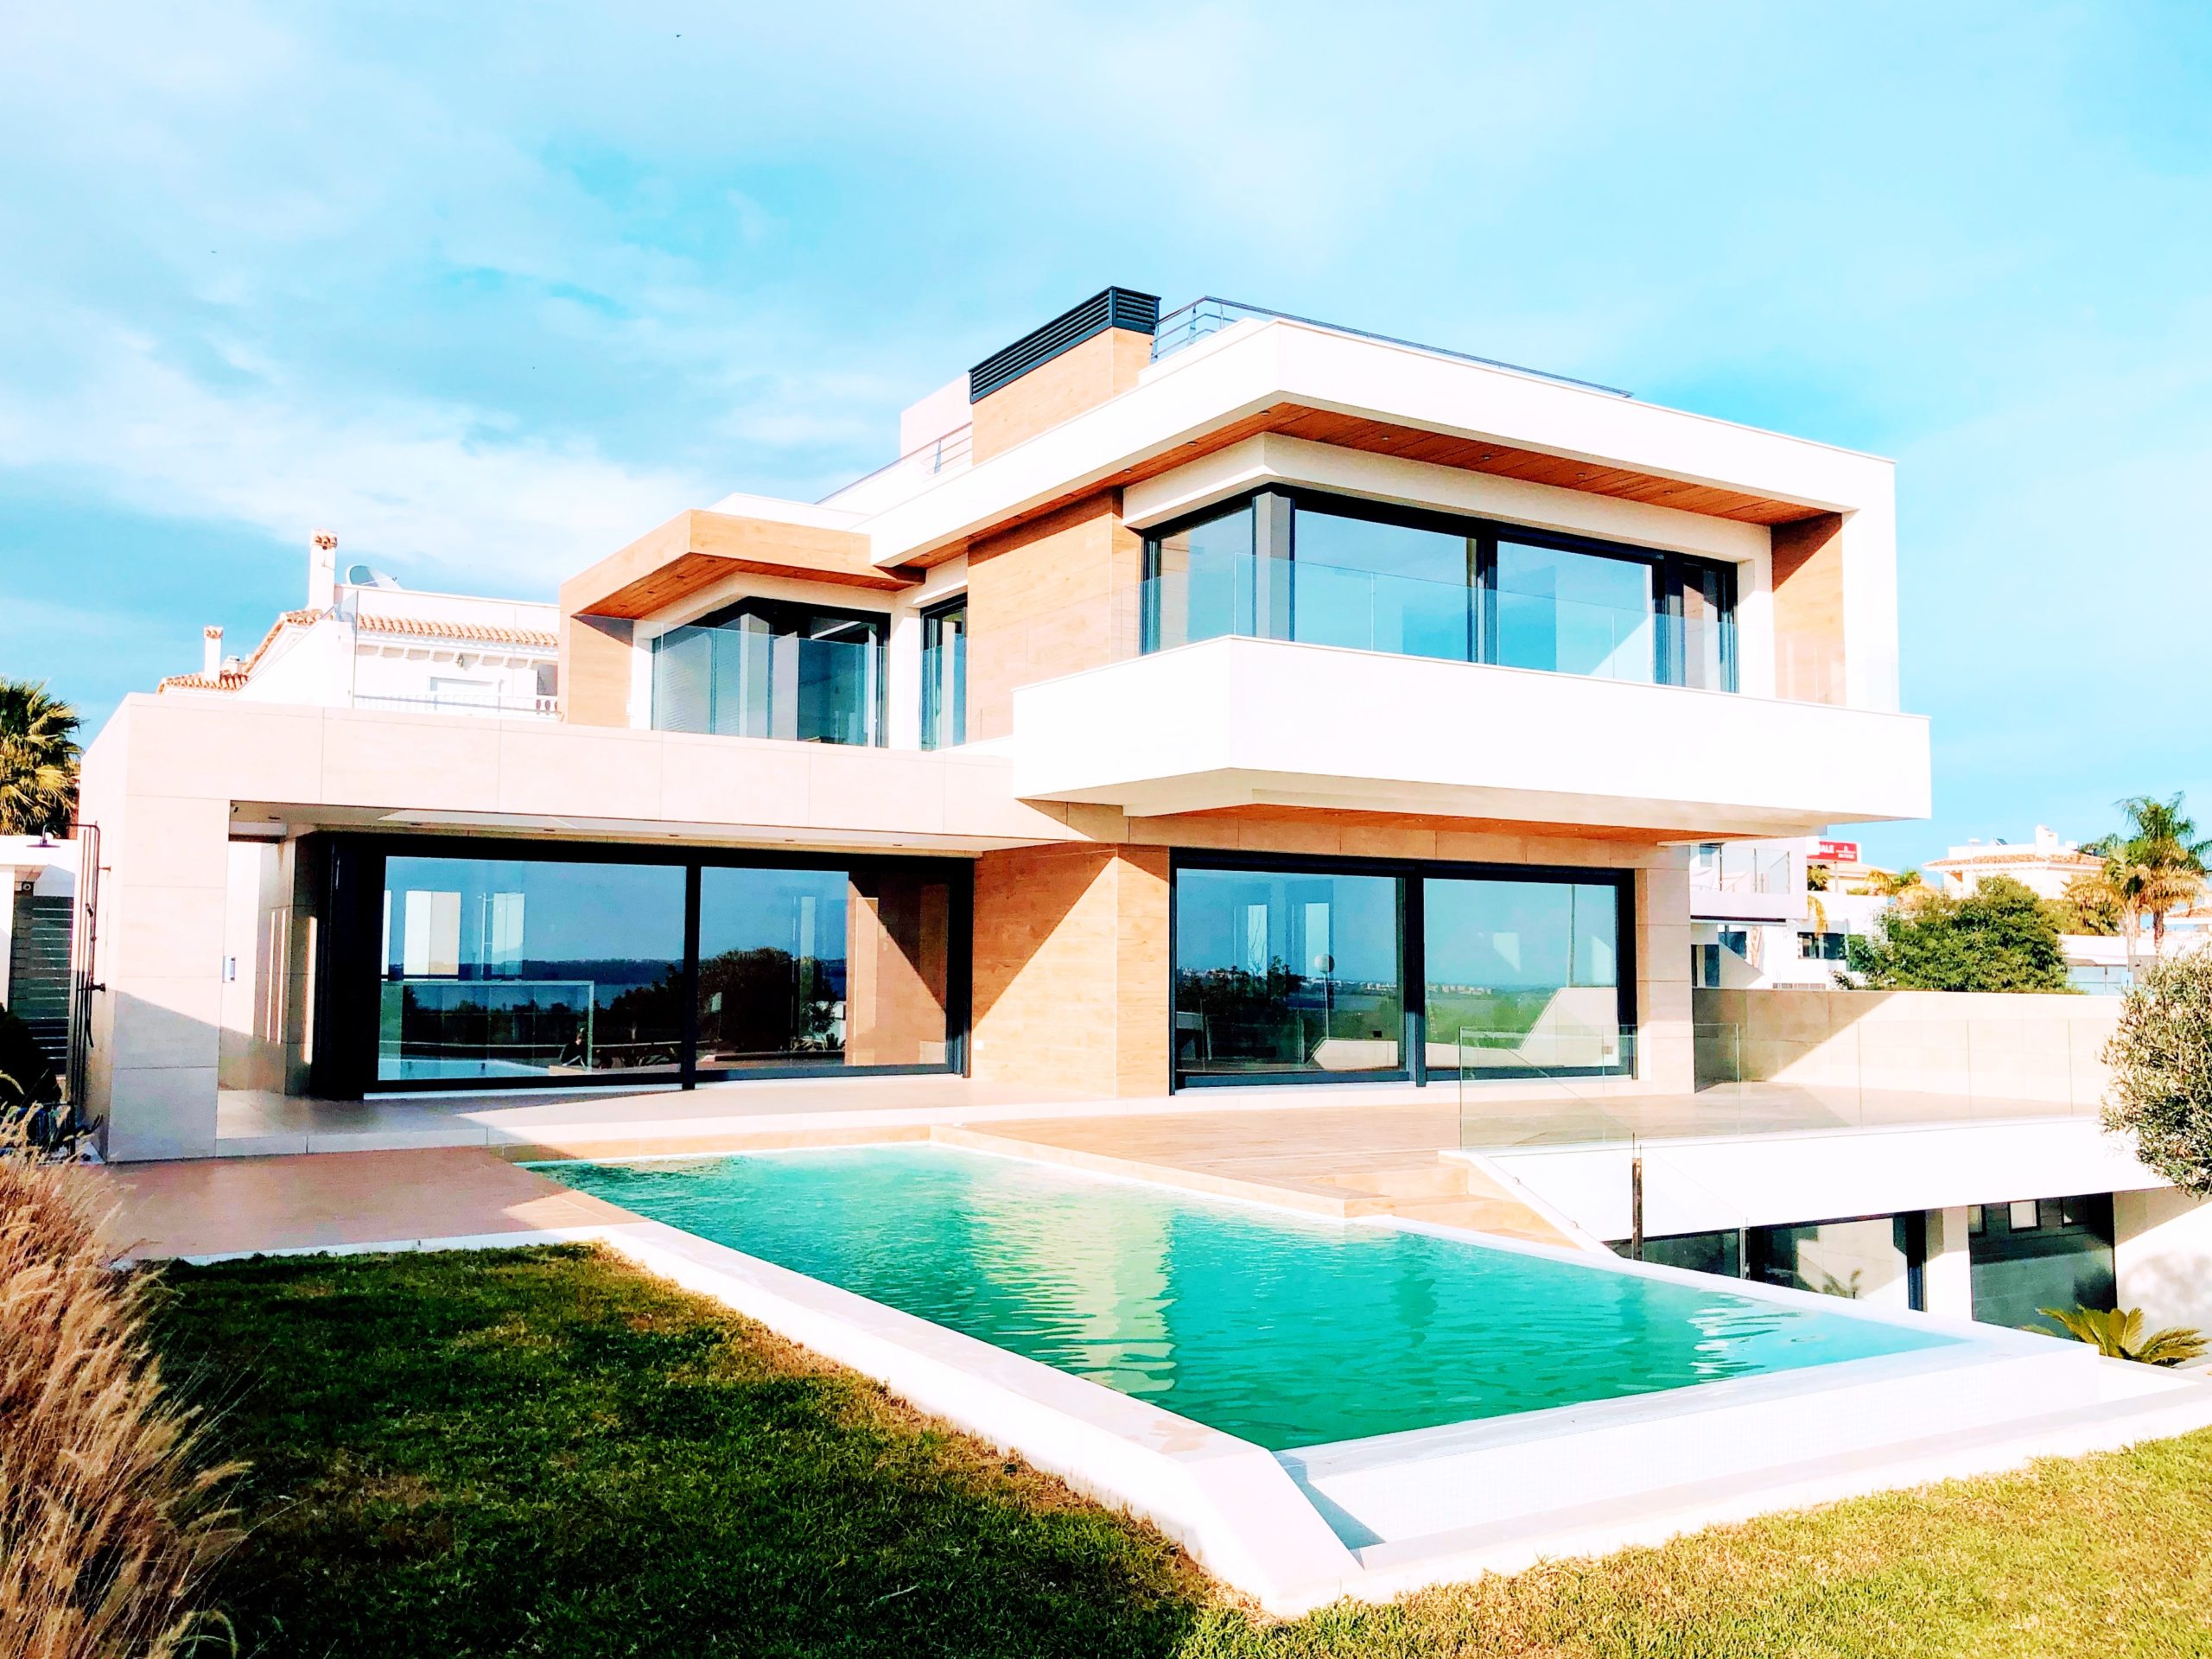 <img src="large.jpg" alt="large modern house with pool"/> 